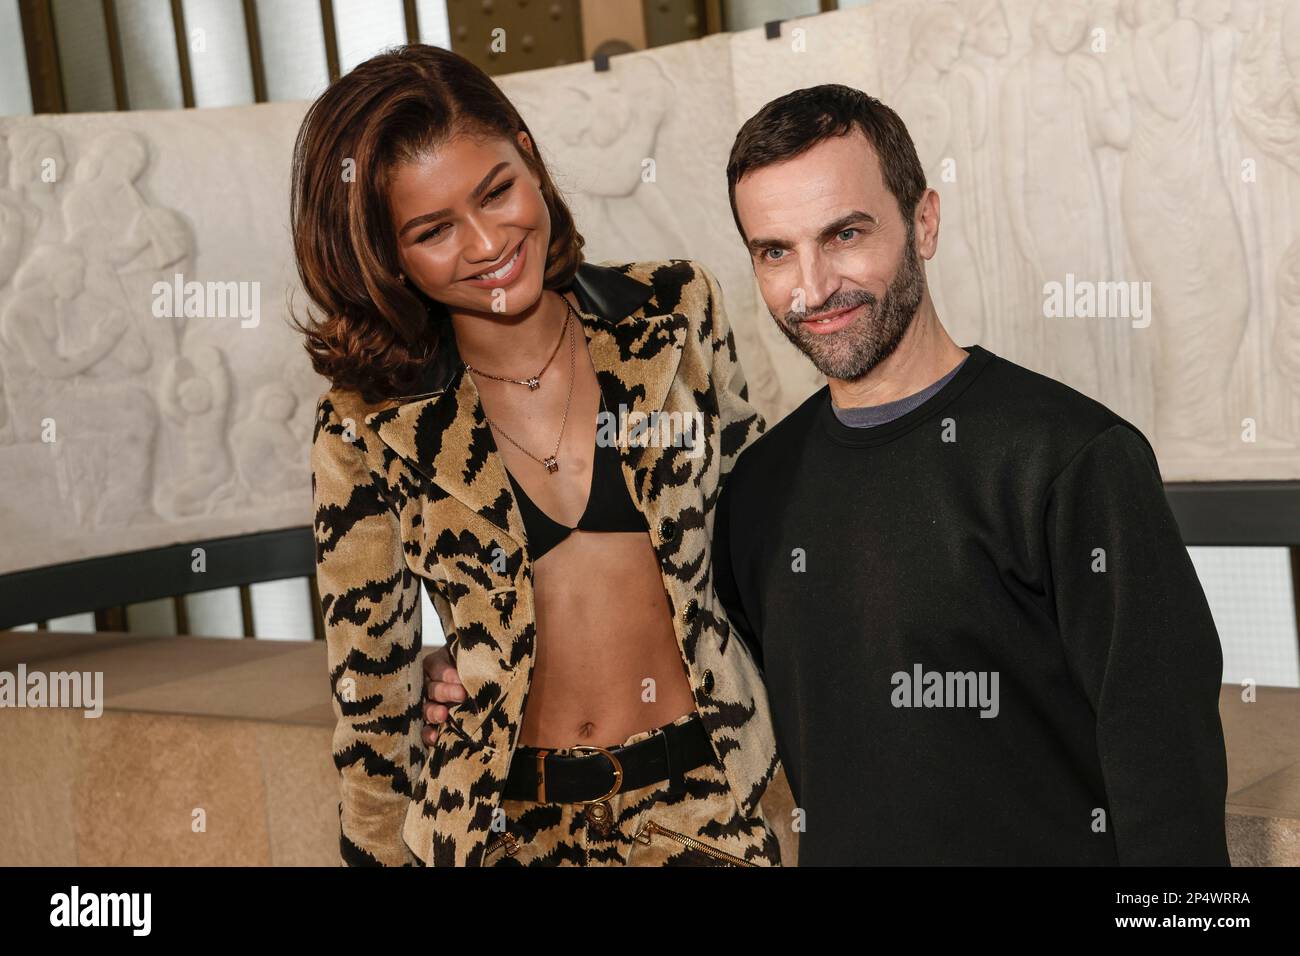 🇵🇸 on X: Zendaya & Nicolas Ghesquiere for Louis Vuitton's